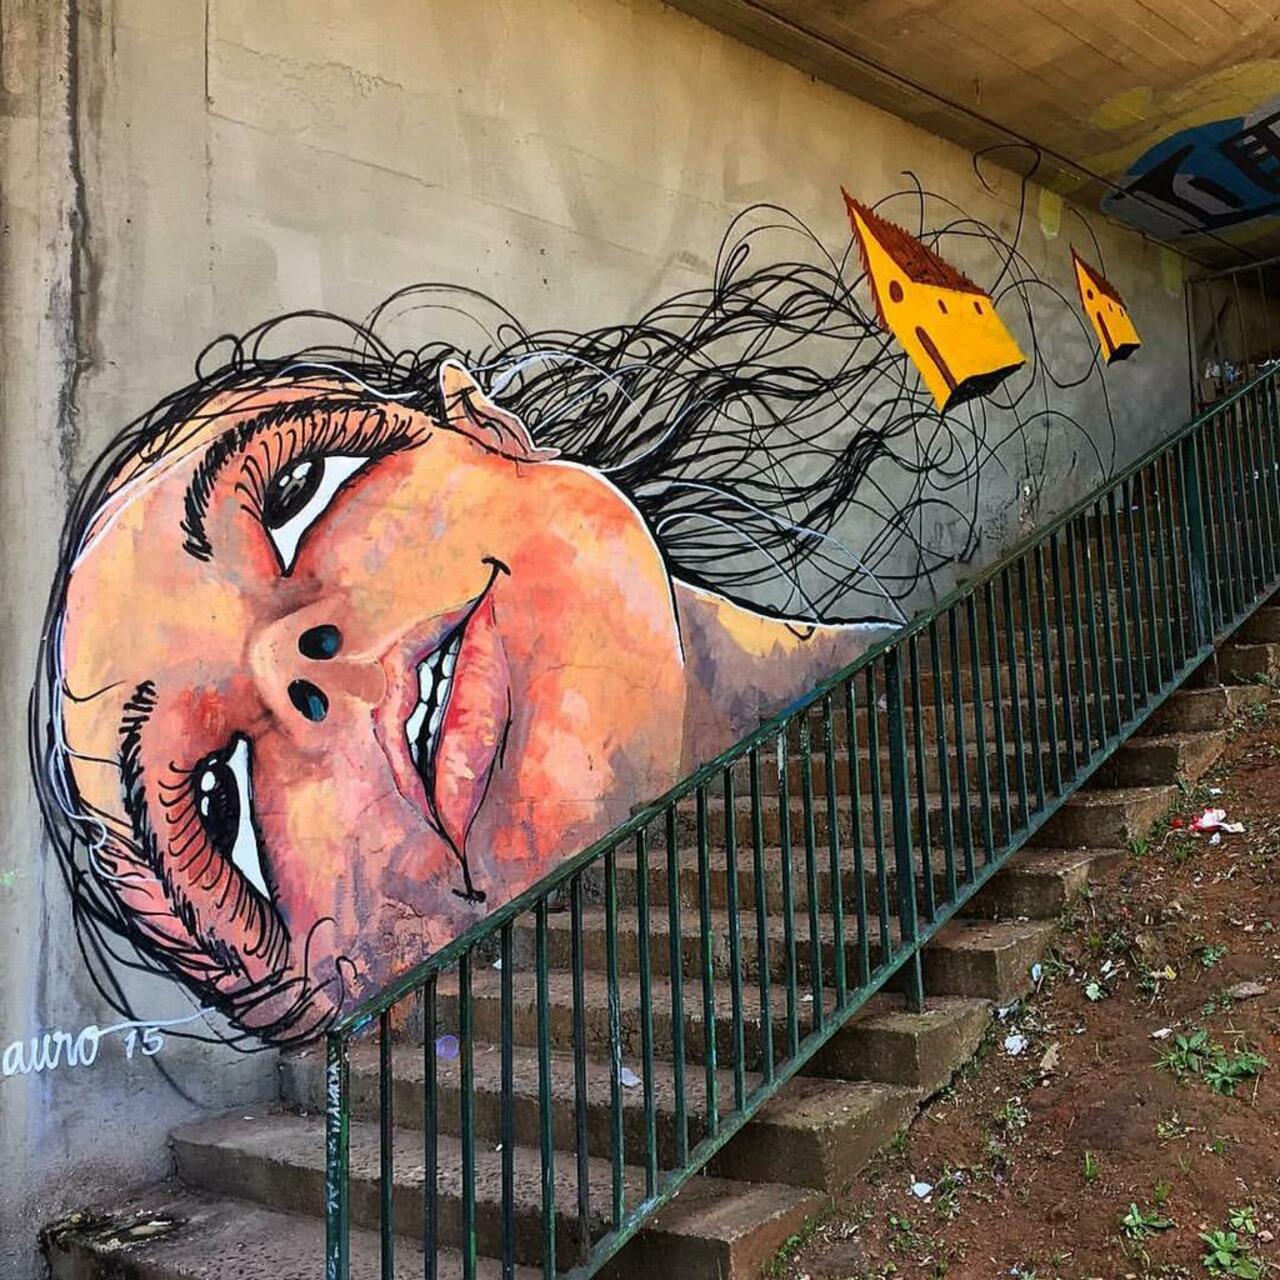 New tumblr post: "New tumblr post: "Street Art by Reveracidade in São Paulo 

#art #graffiti #mural #streetart http://t.co/OGC9lyWIfV" …" …